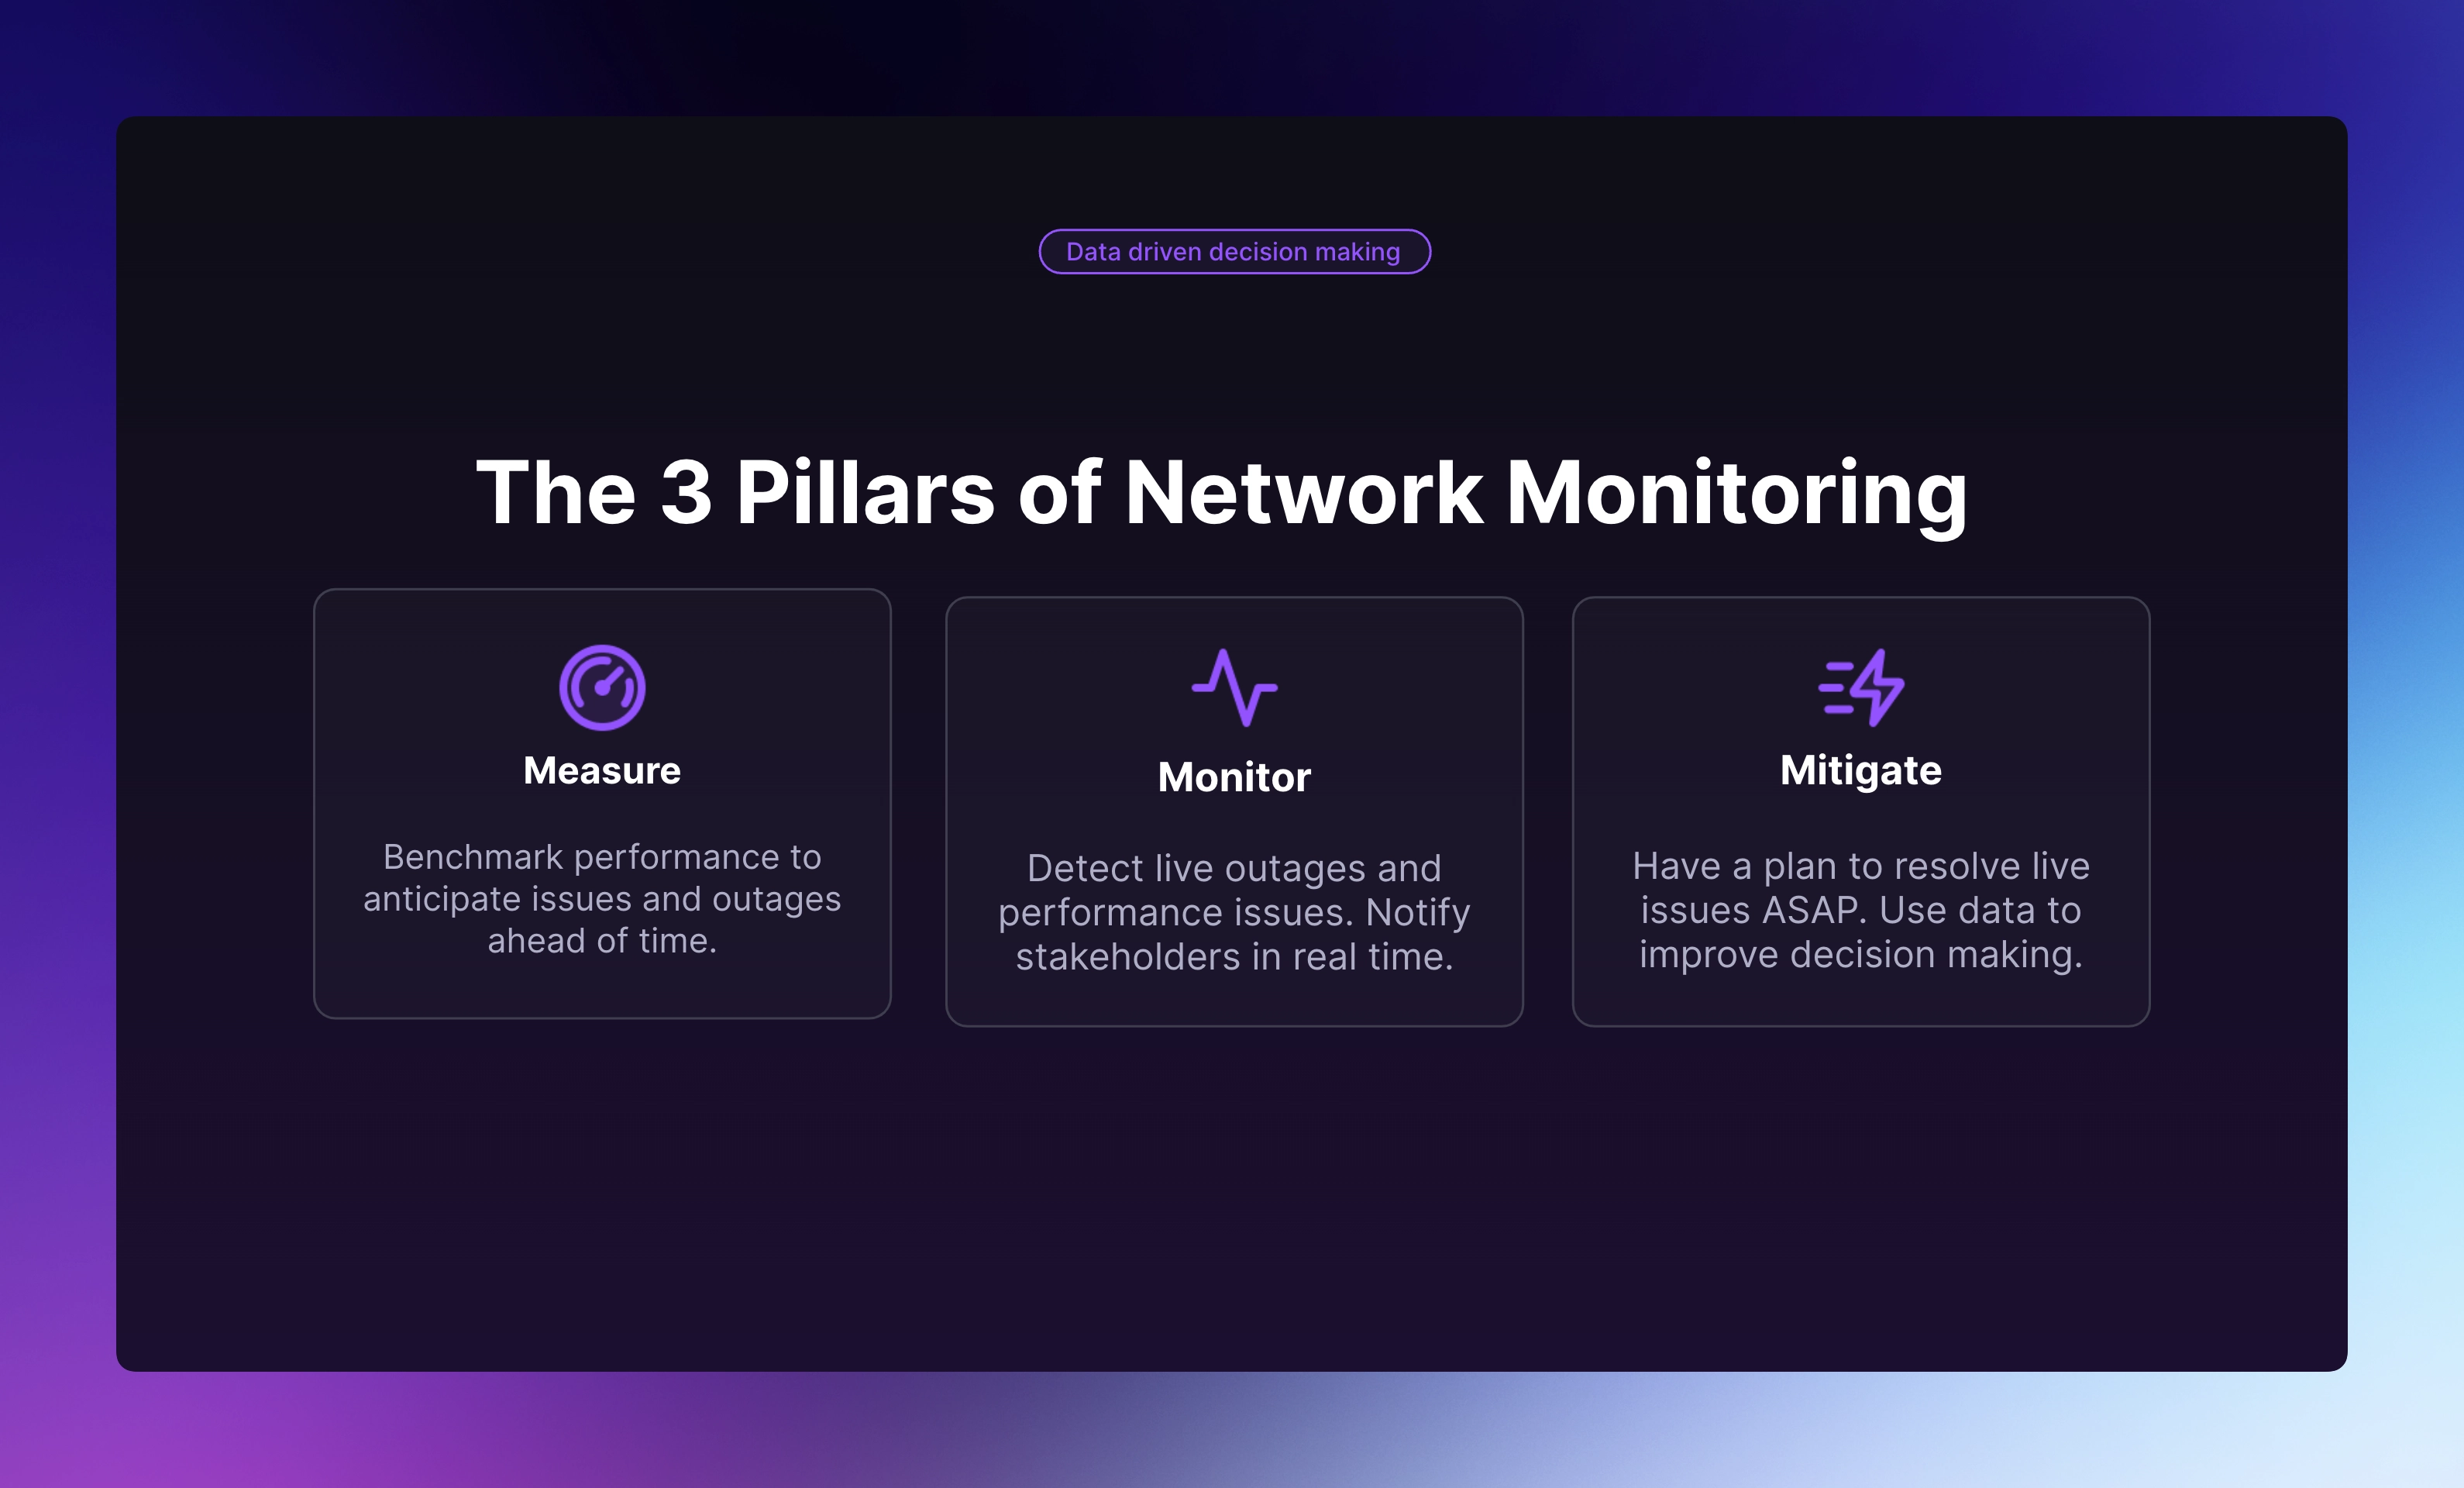 The 3 Pillars of Network Monitoring